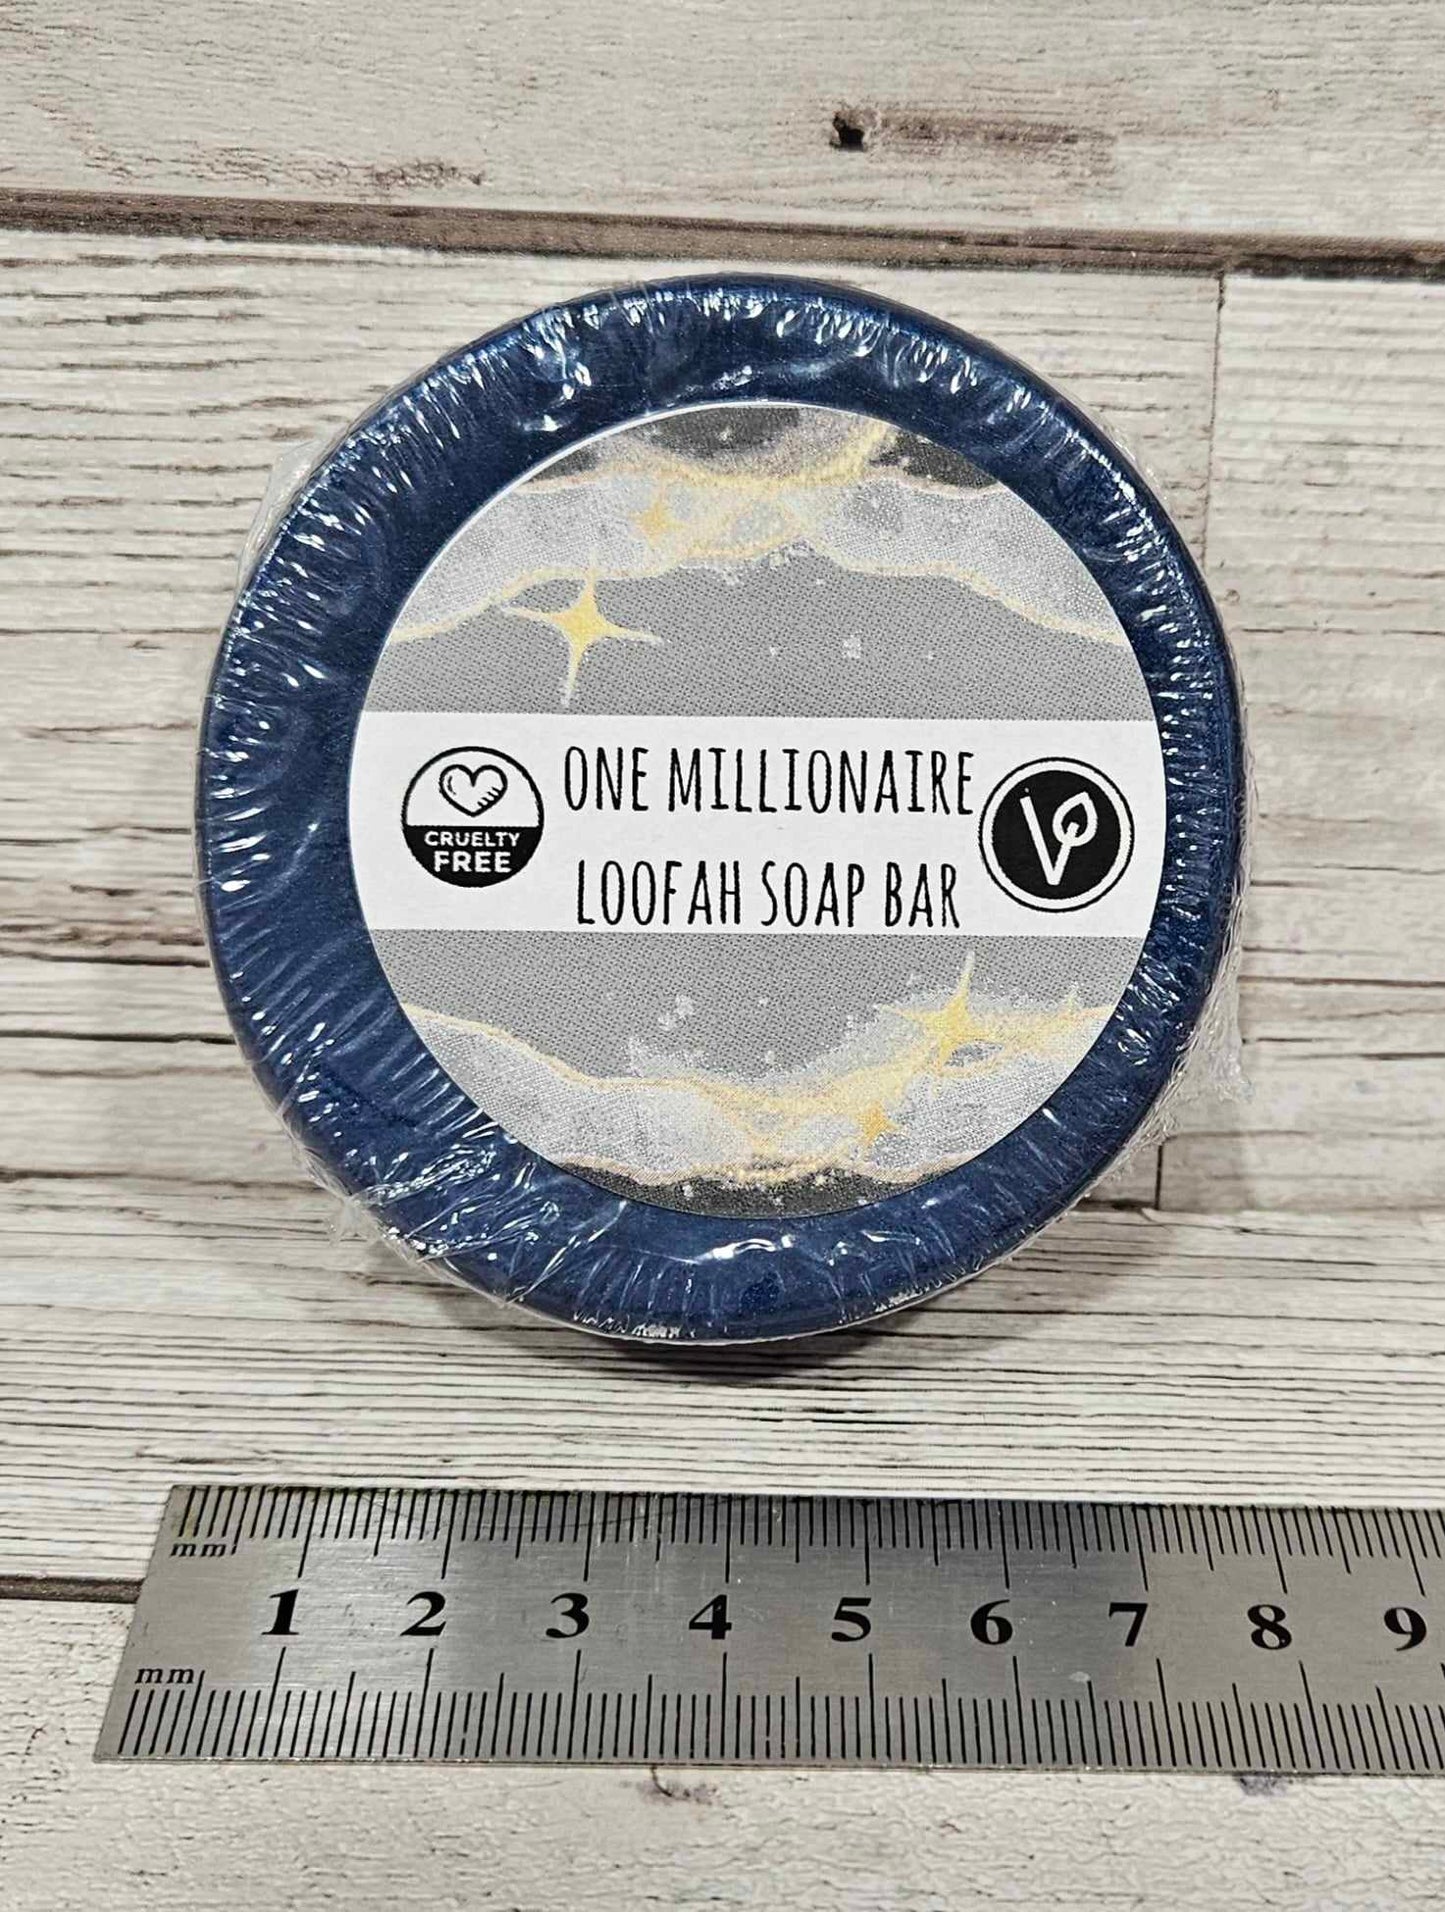 'One Millionaire' Loofah Soap Bar